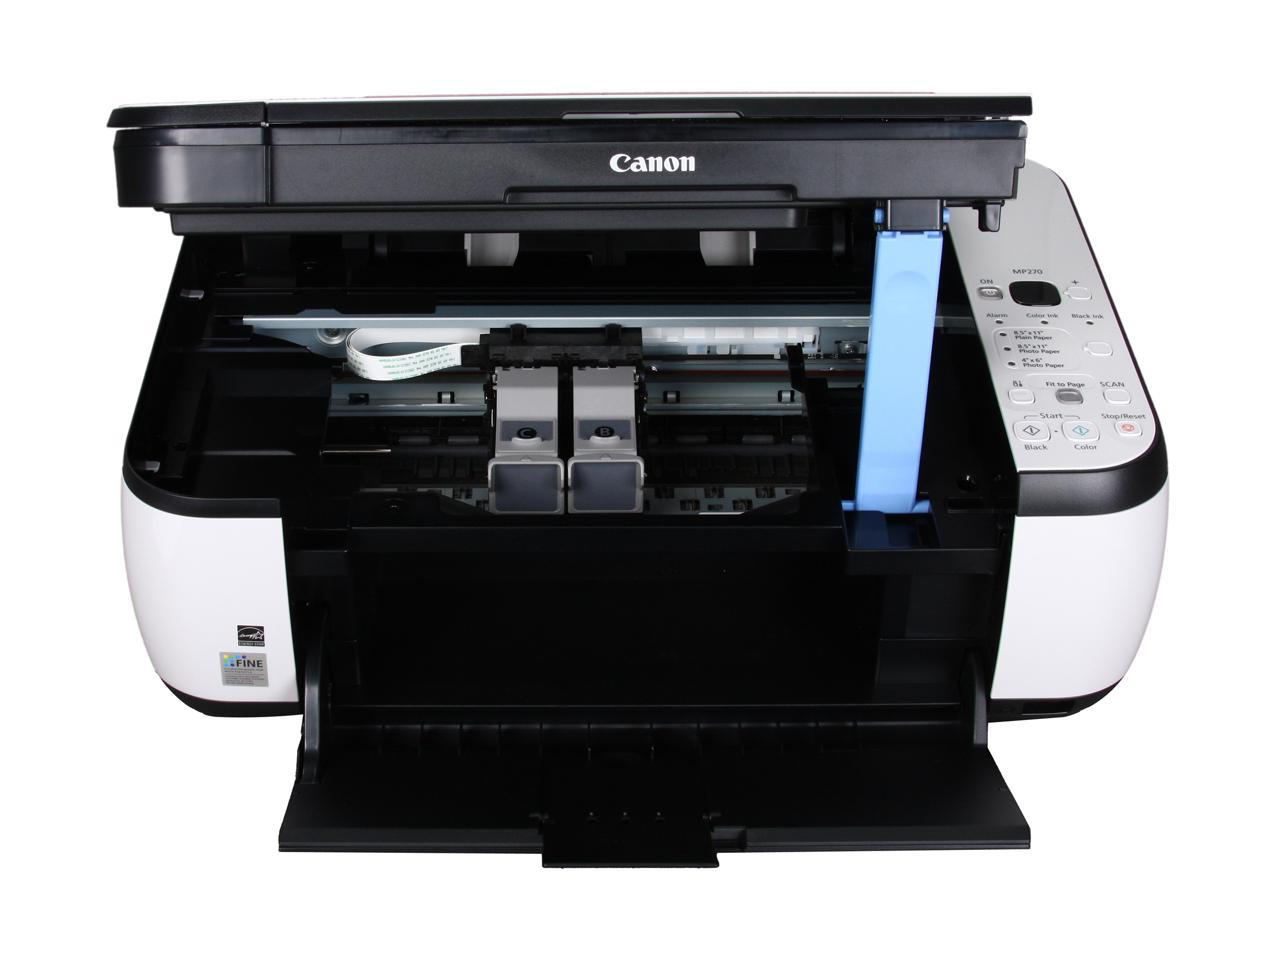 canon mp490 printer not printing